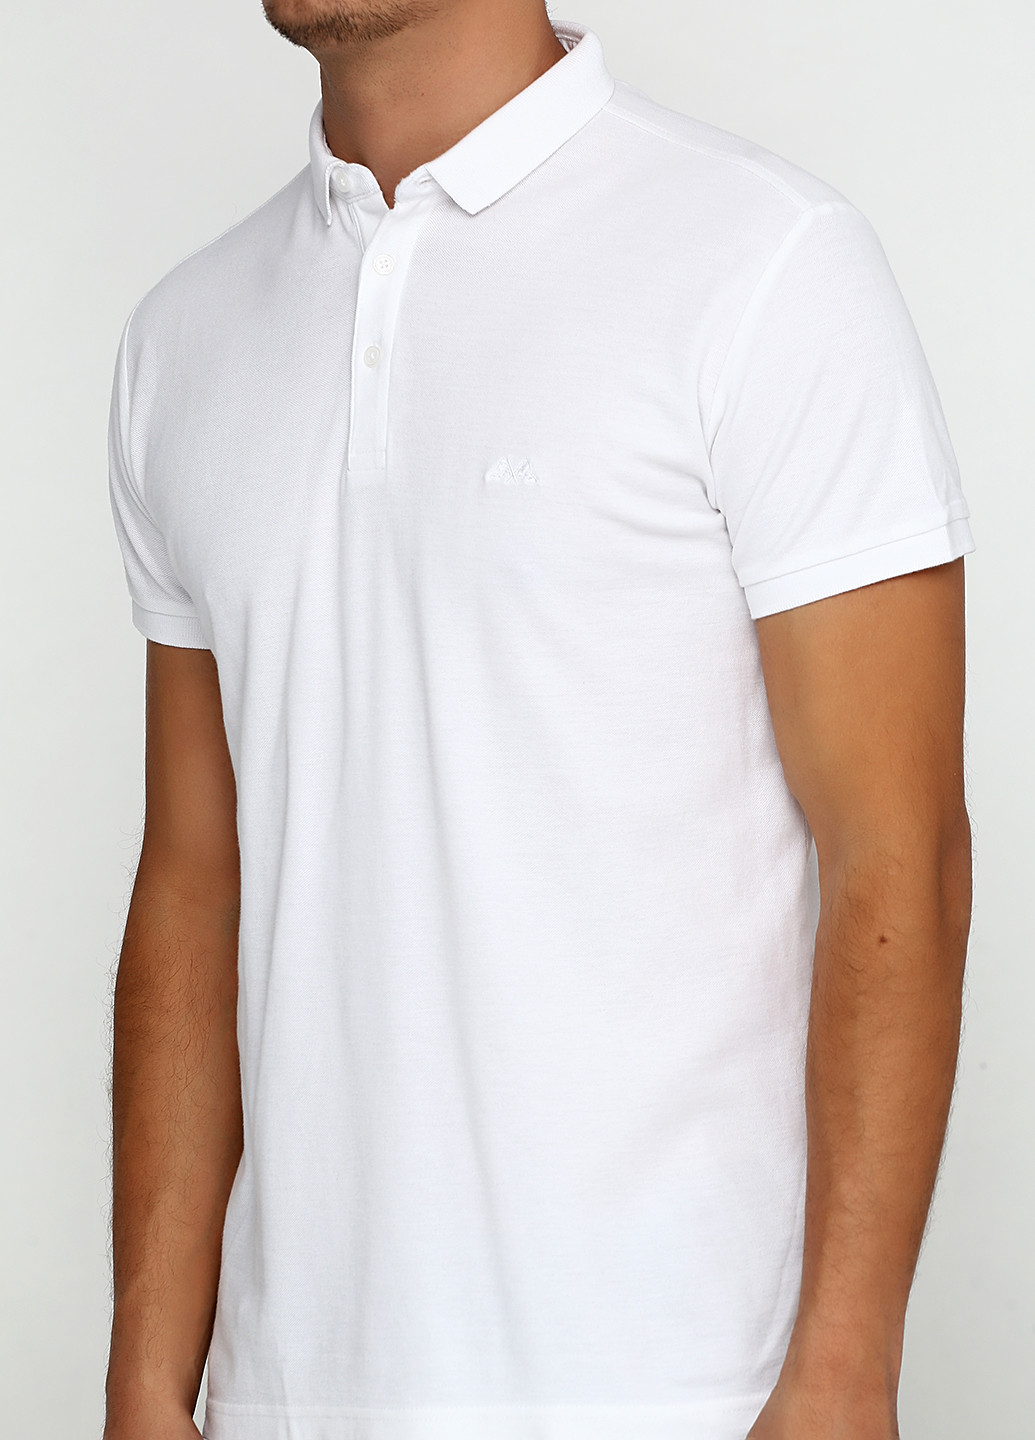 Белая футболка-футболка для мужчин Lindbergh однотонная